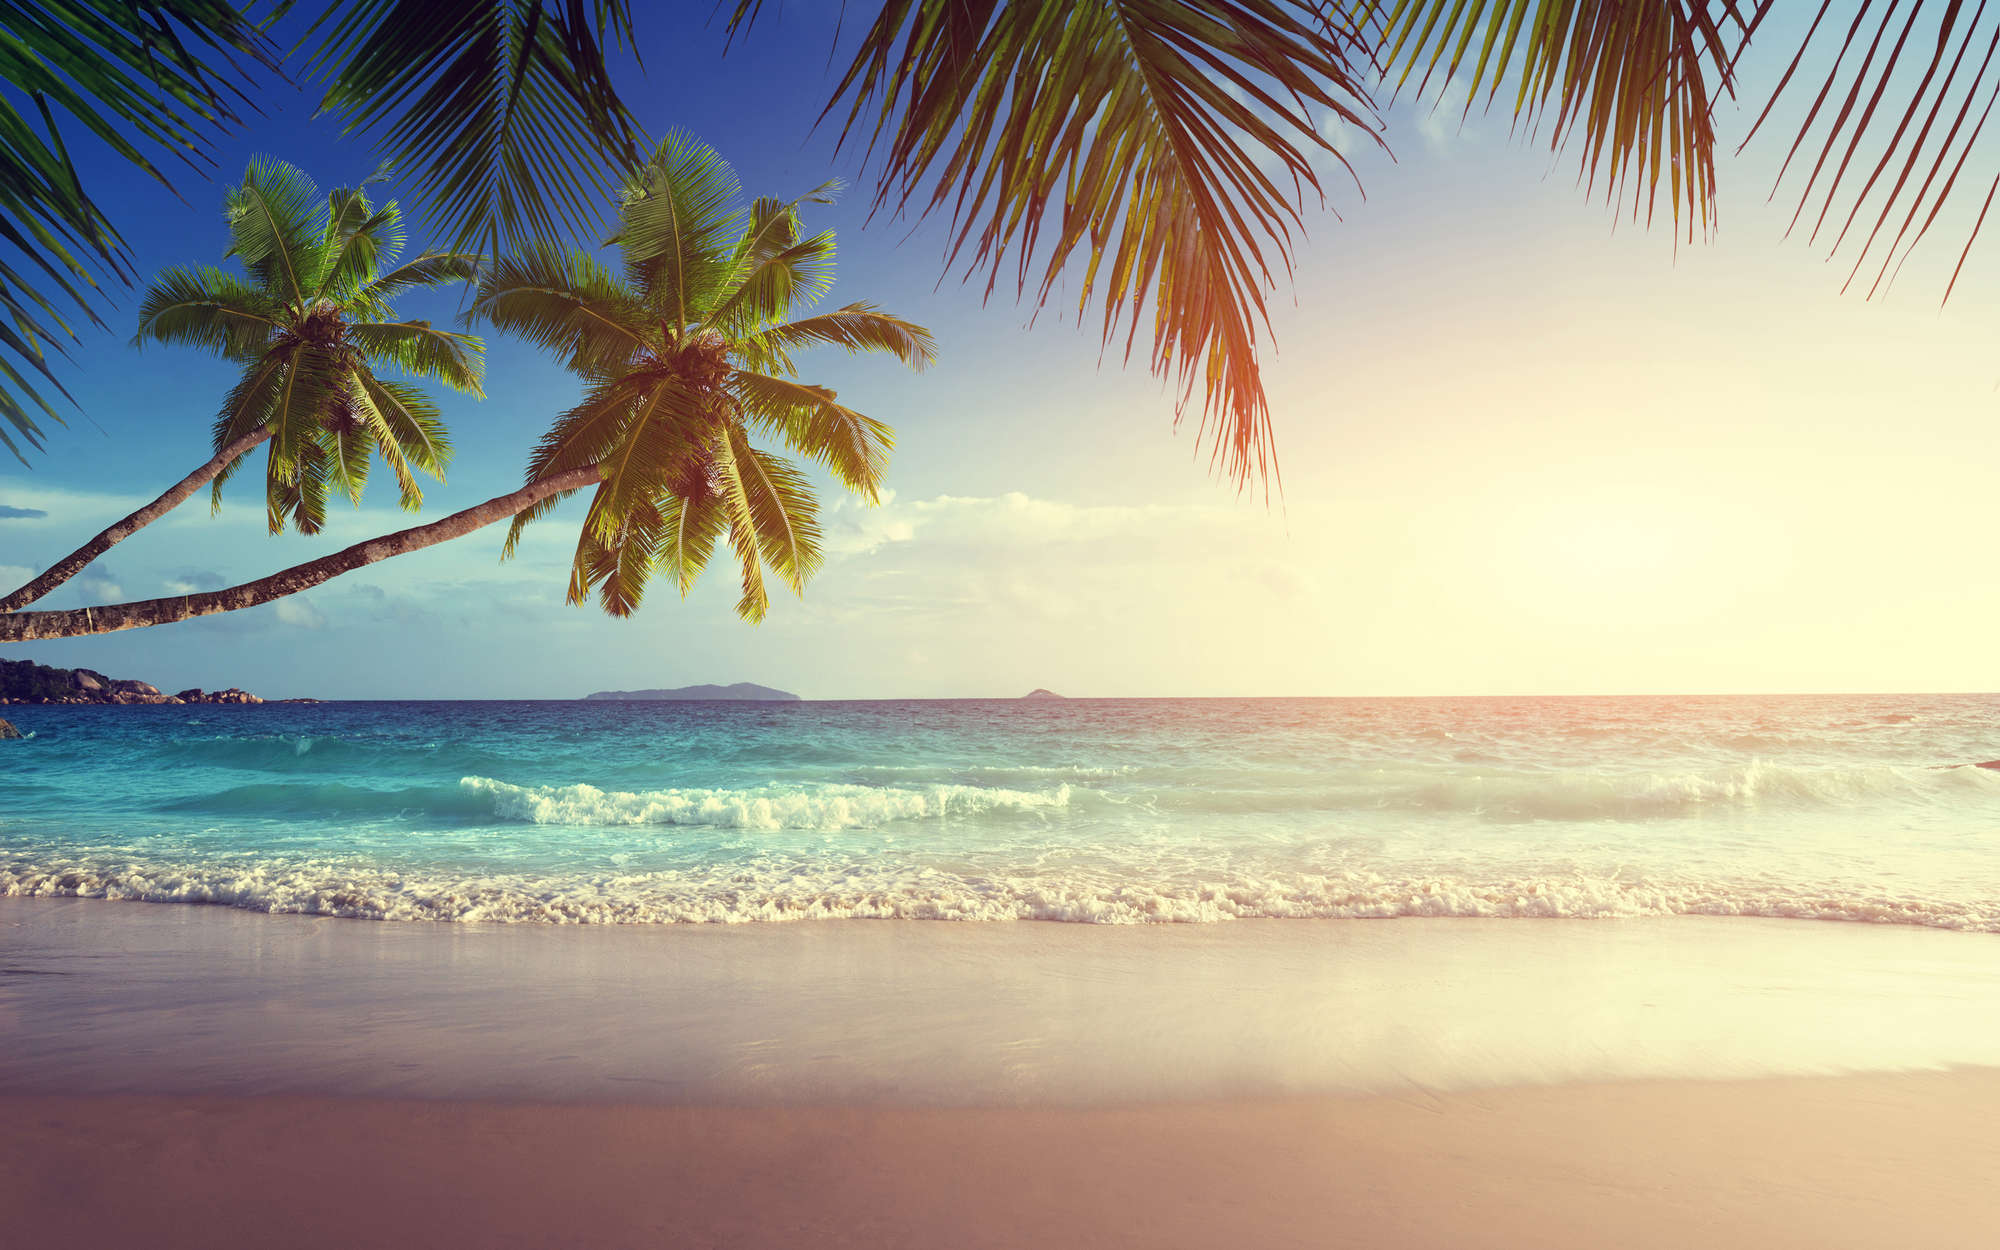             Fototapete Seychellen mit Palmen – Premium Glattvlies
        